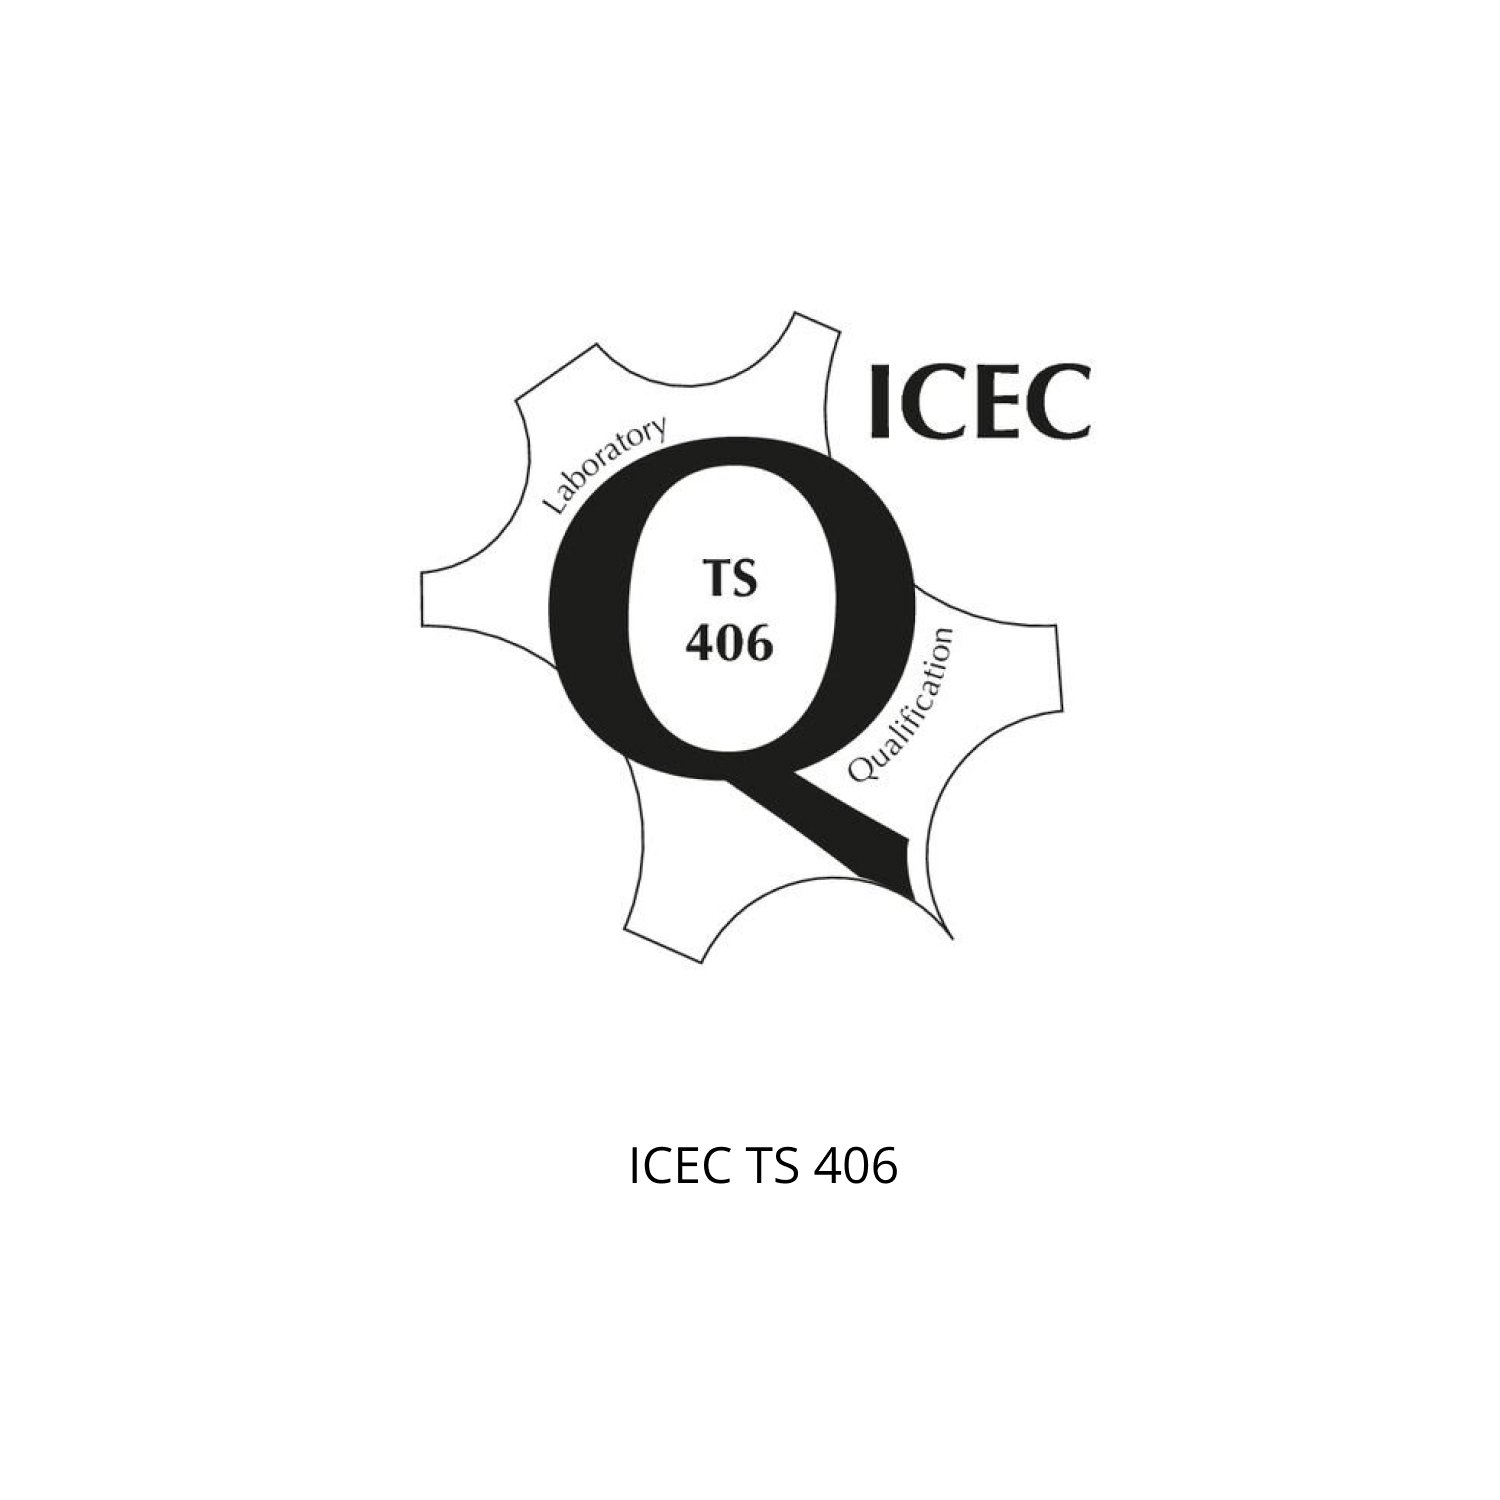 ICEC TS 406.jpg (Copia) (Copia)